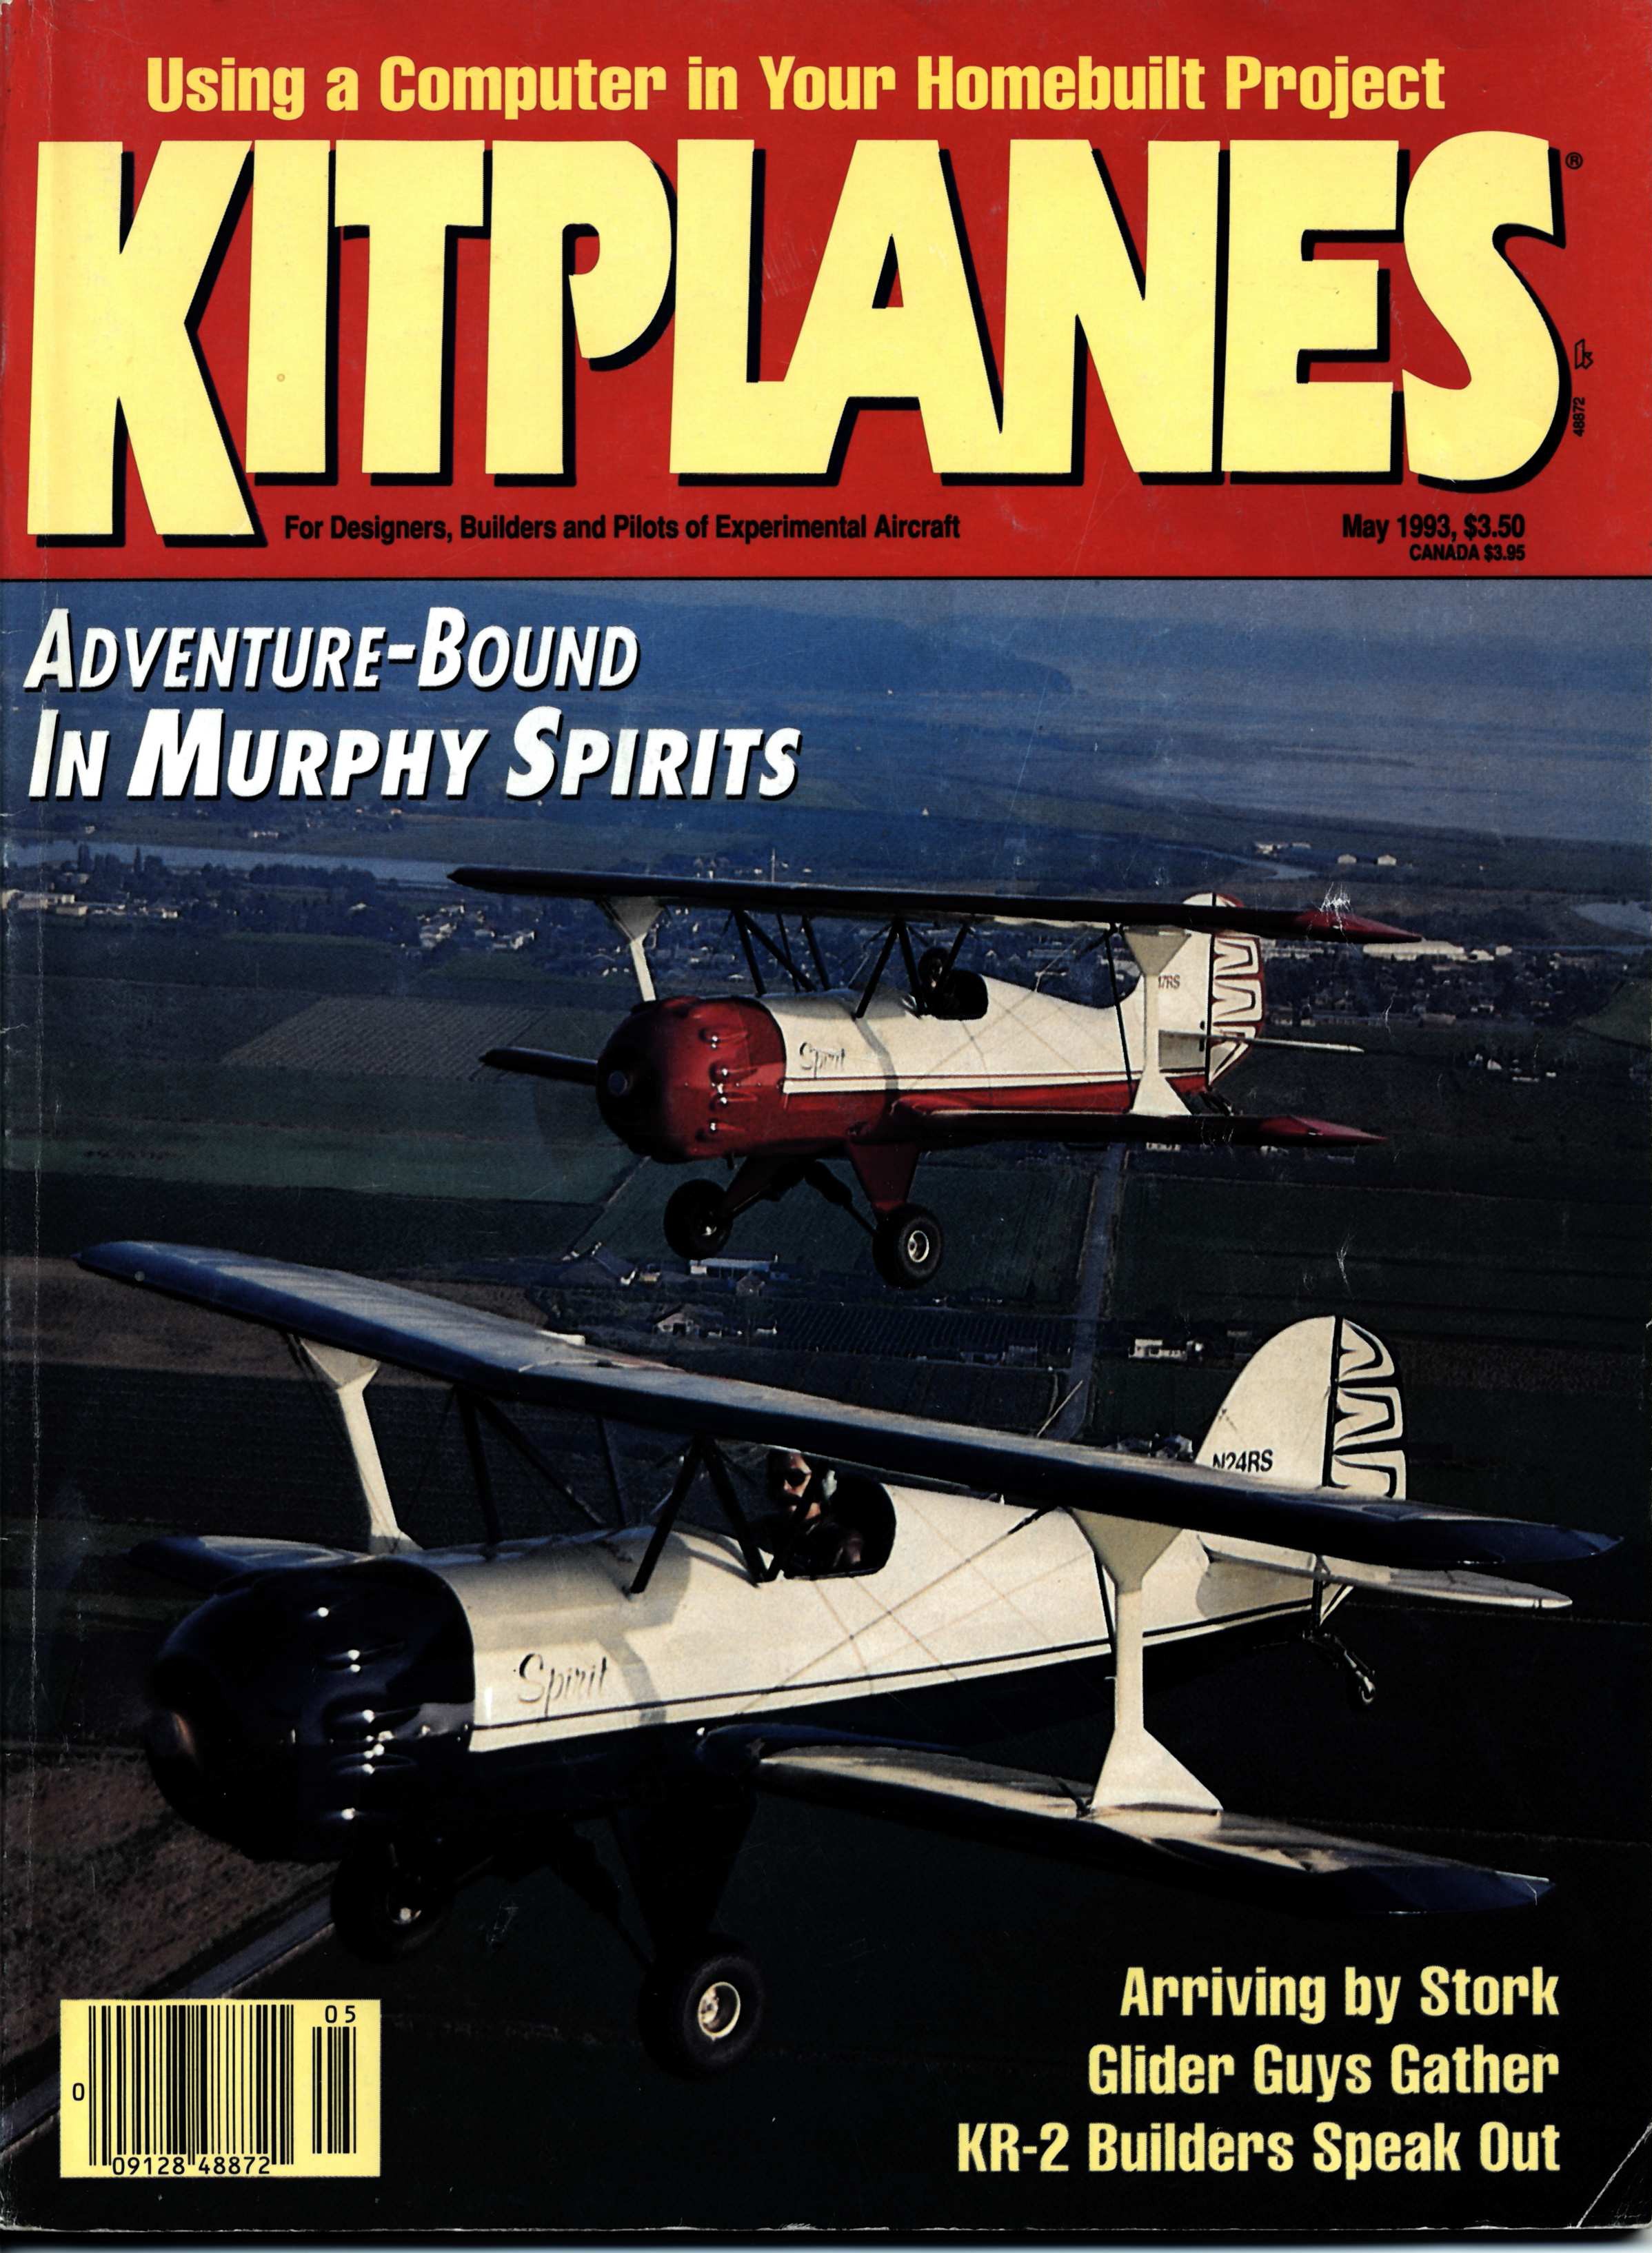 Kitplanes - page 1